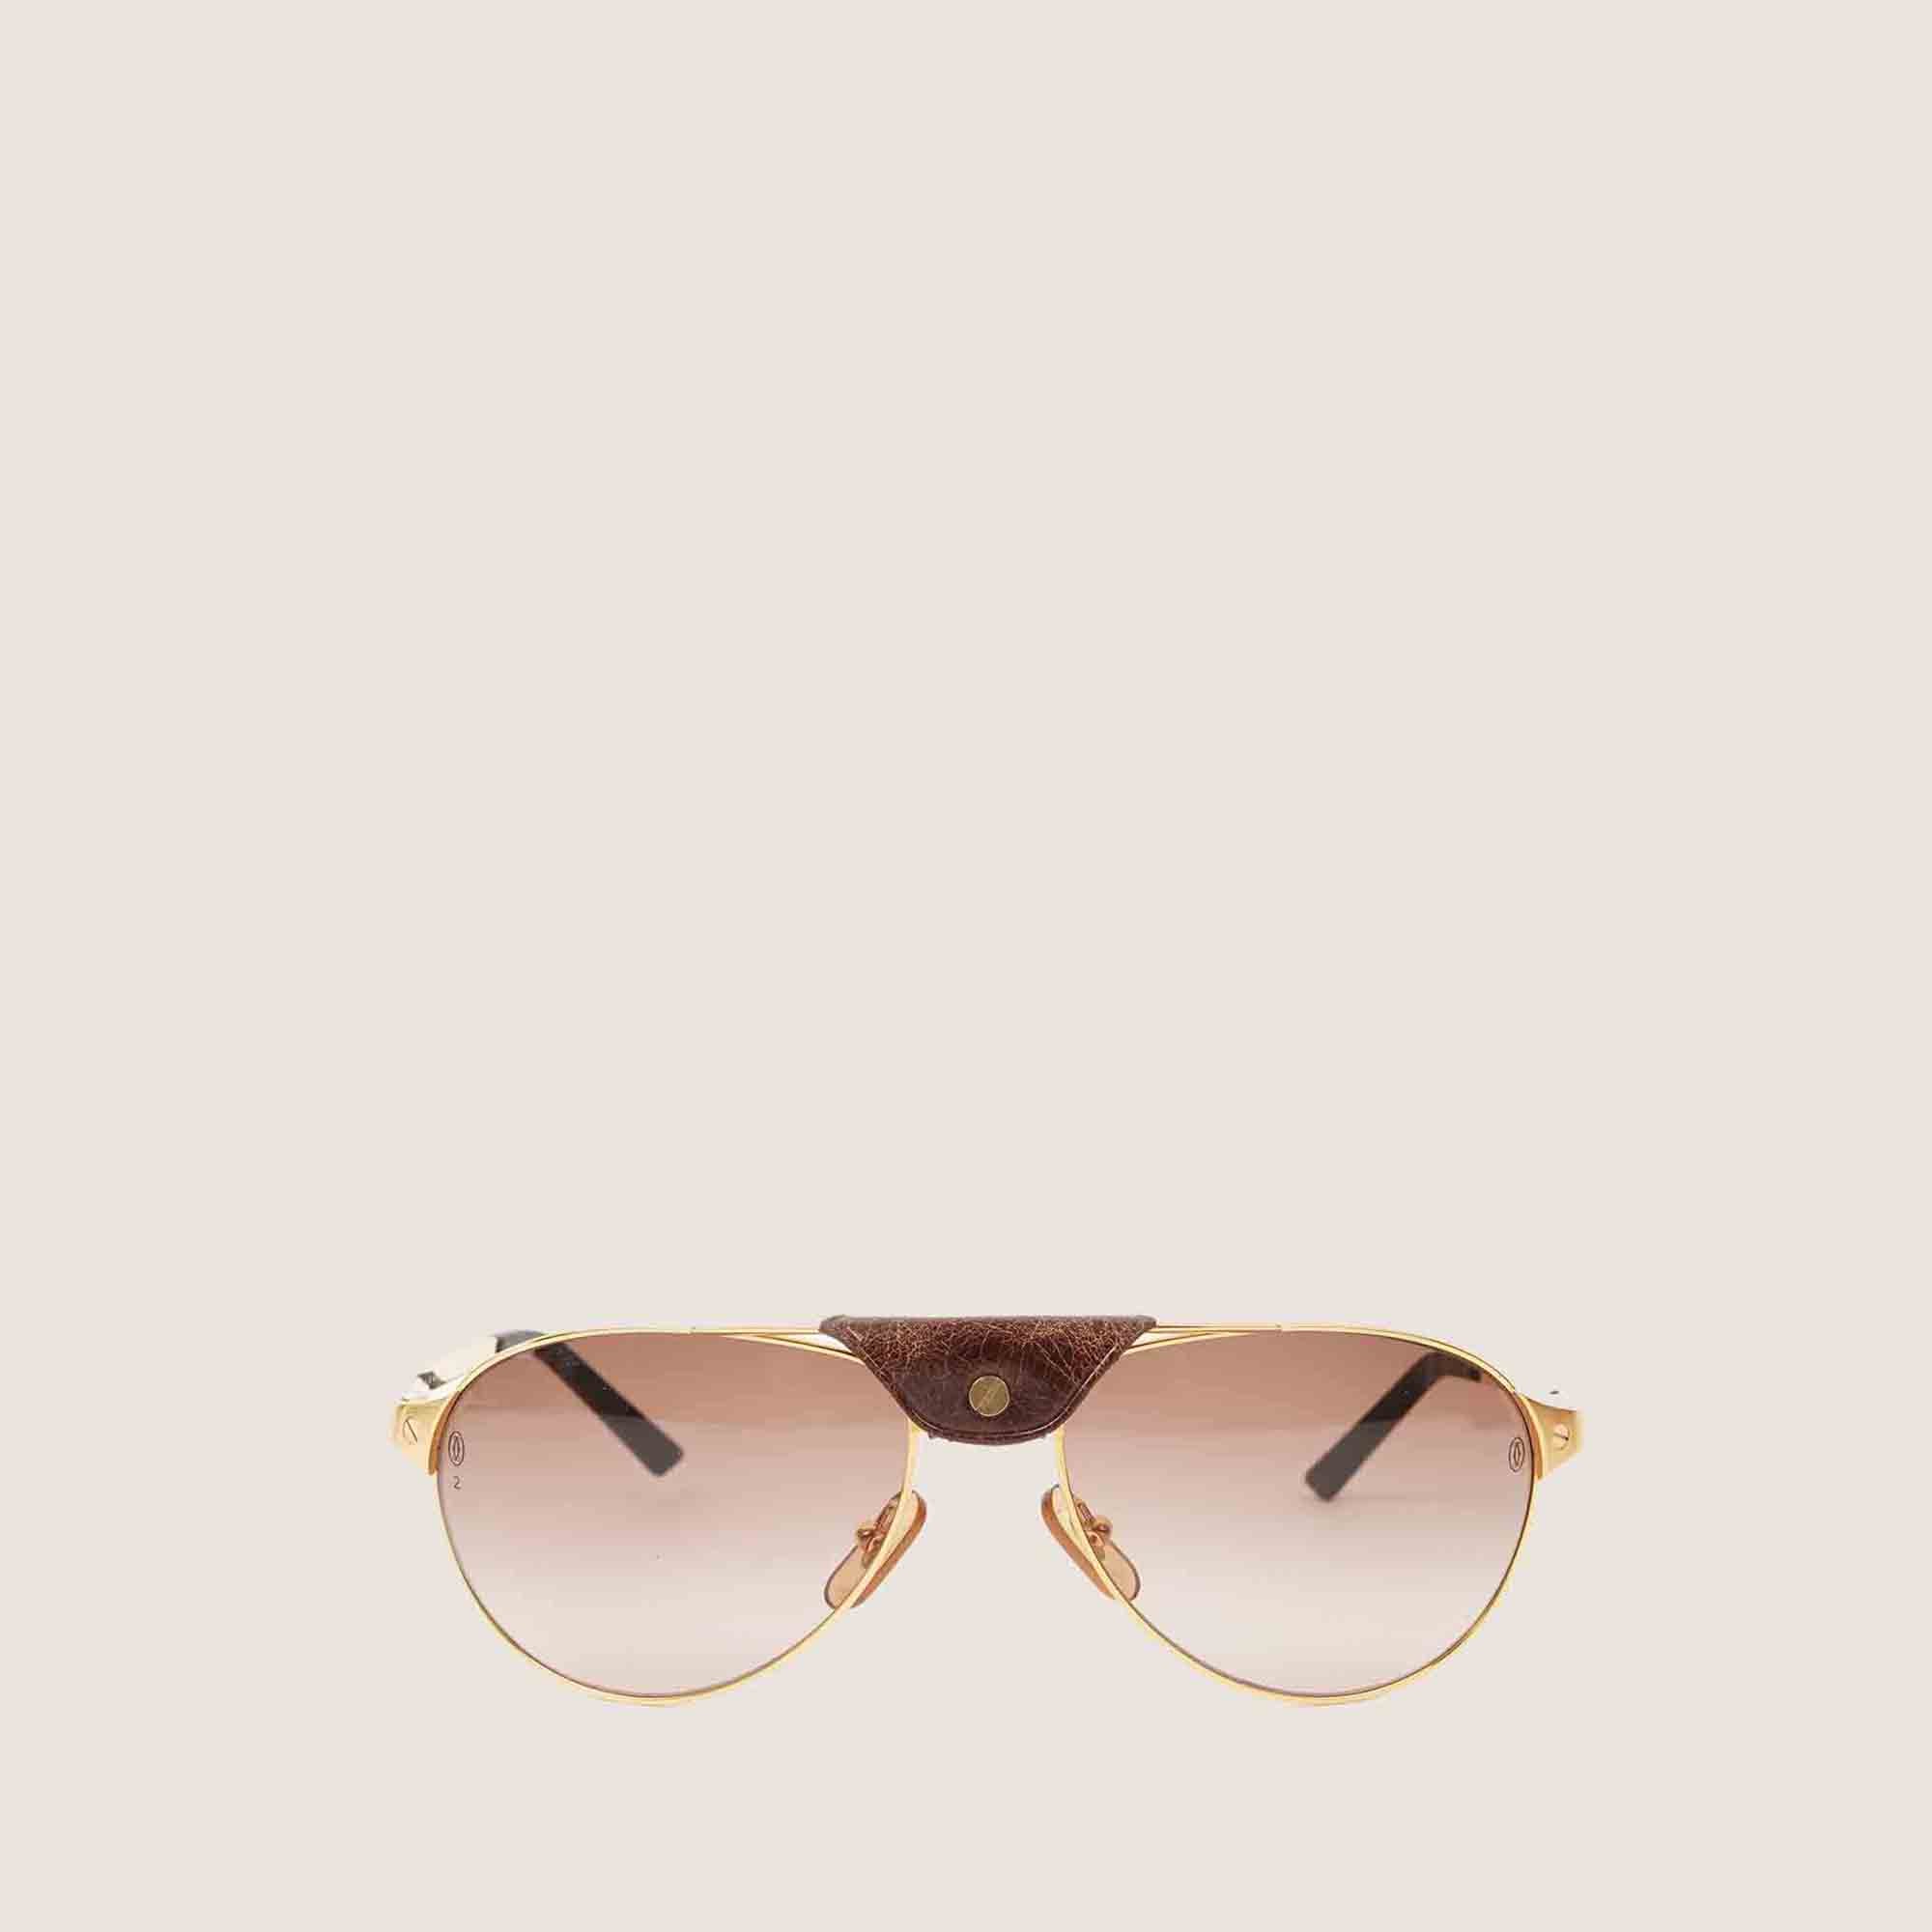 Aviator Sunglasses - CARTIER - Affordable Luxury